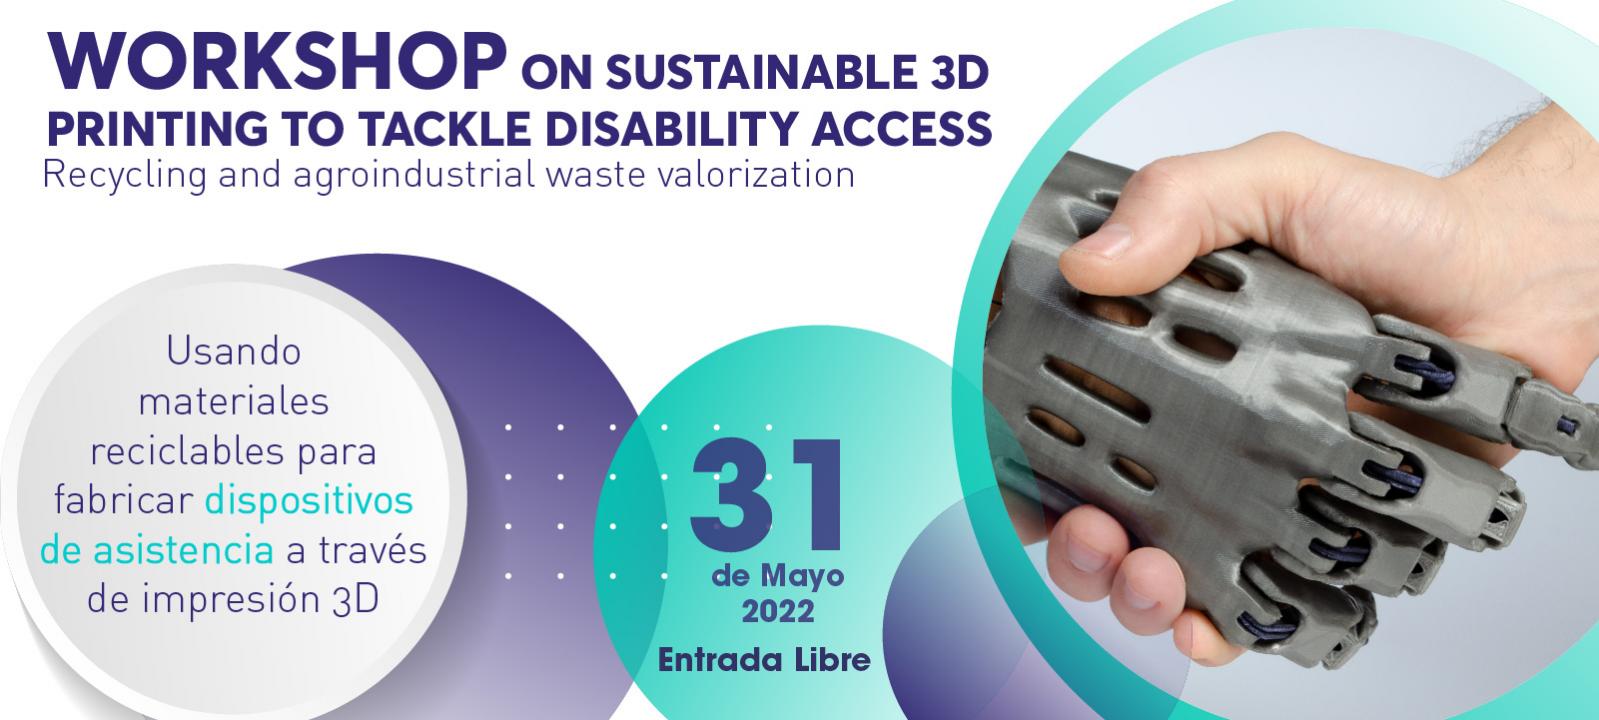 WORKSHOP ON SUSTAINABLE 3D PRINTING TO TACKLE DISABILITY ACCESS ALICIA PORRAS INGENIERÍA QUÍMICA ALIMENTOS UNIANDES